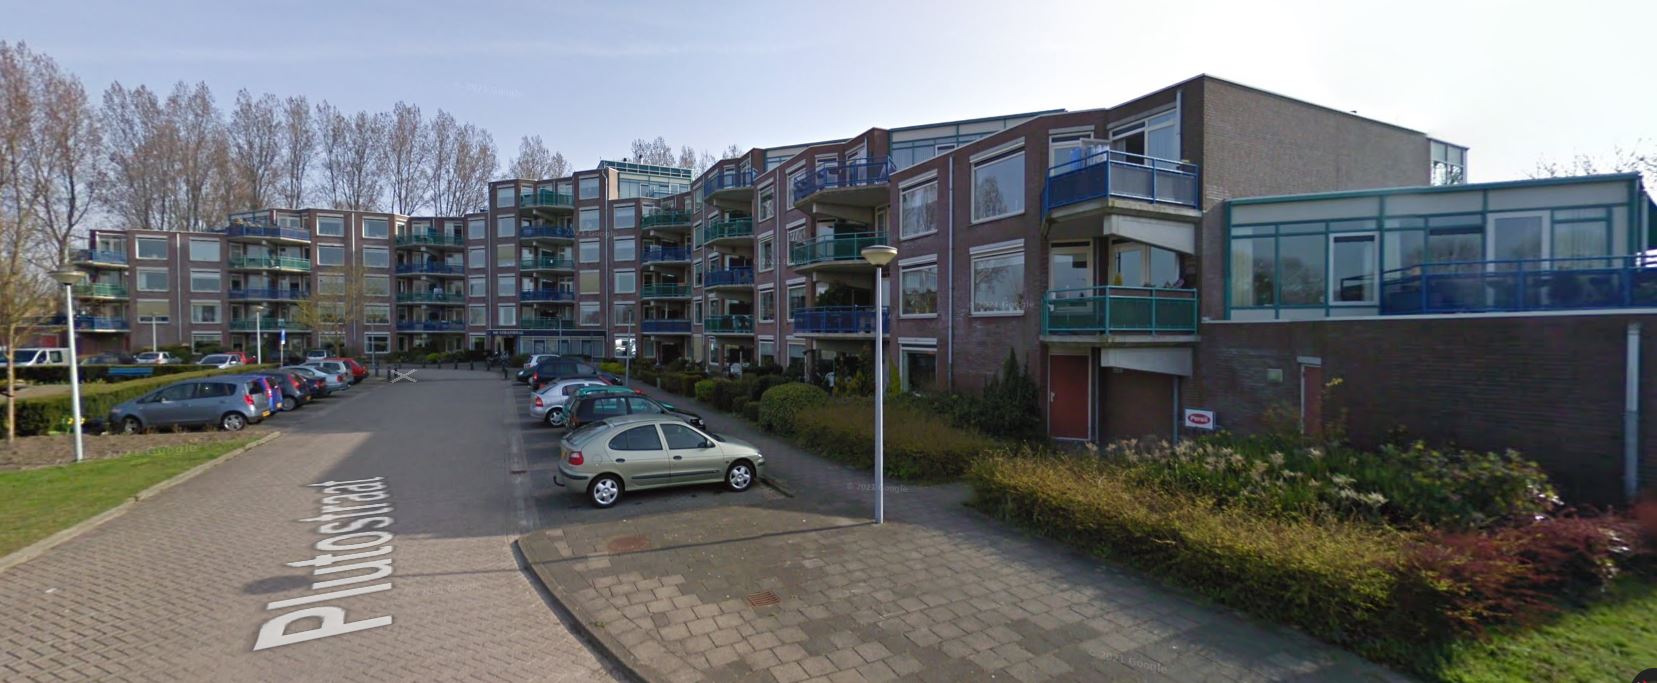 Plutostraat 80, 1829 DG Oudorp, Nederland